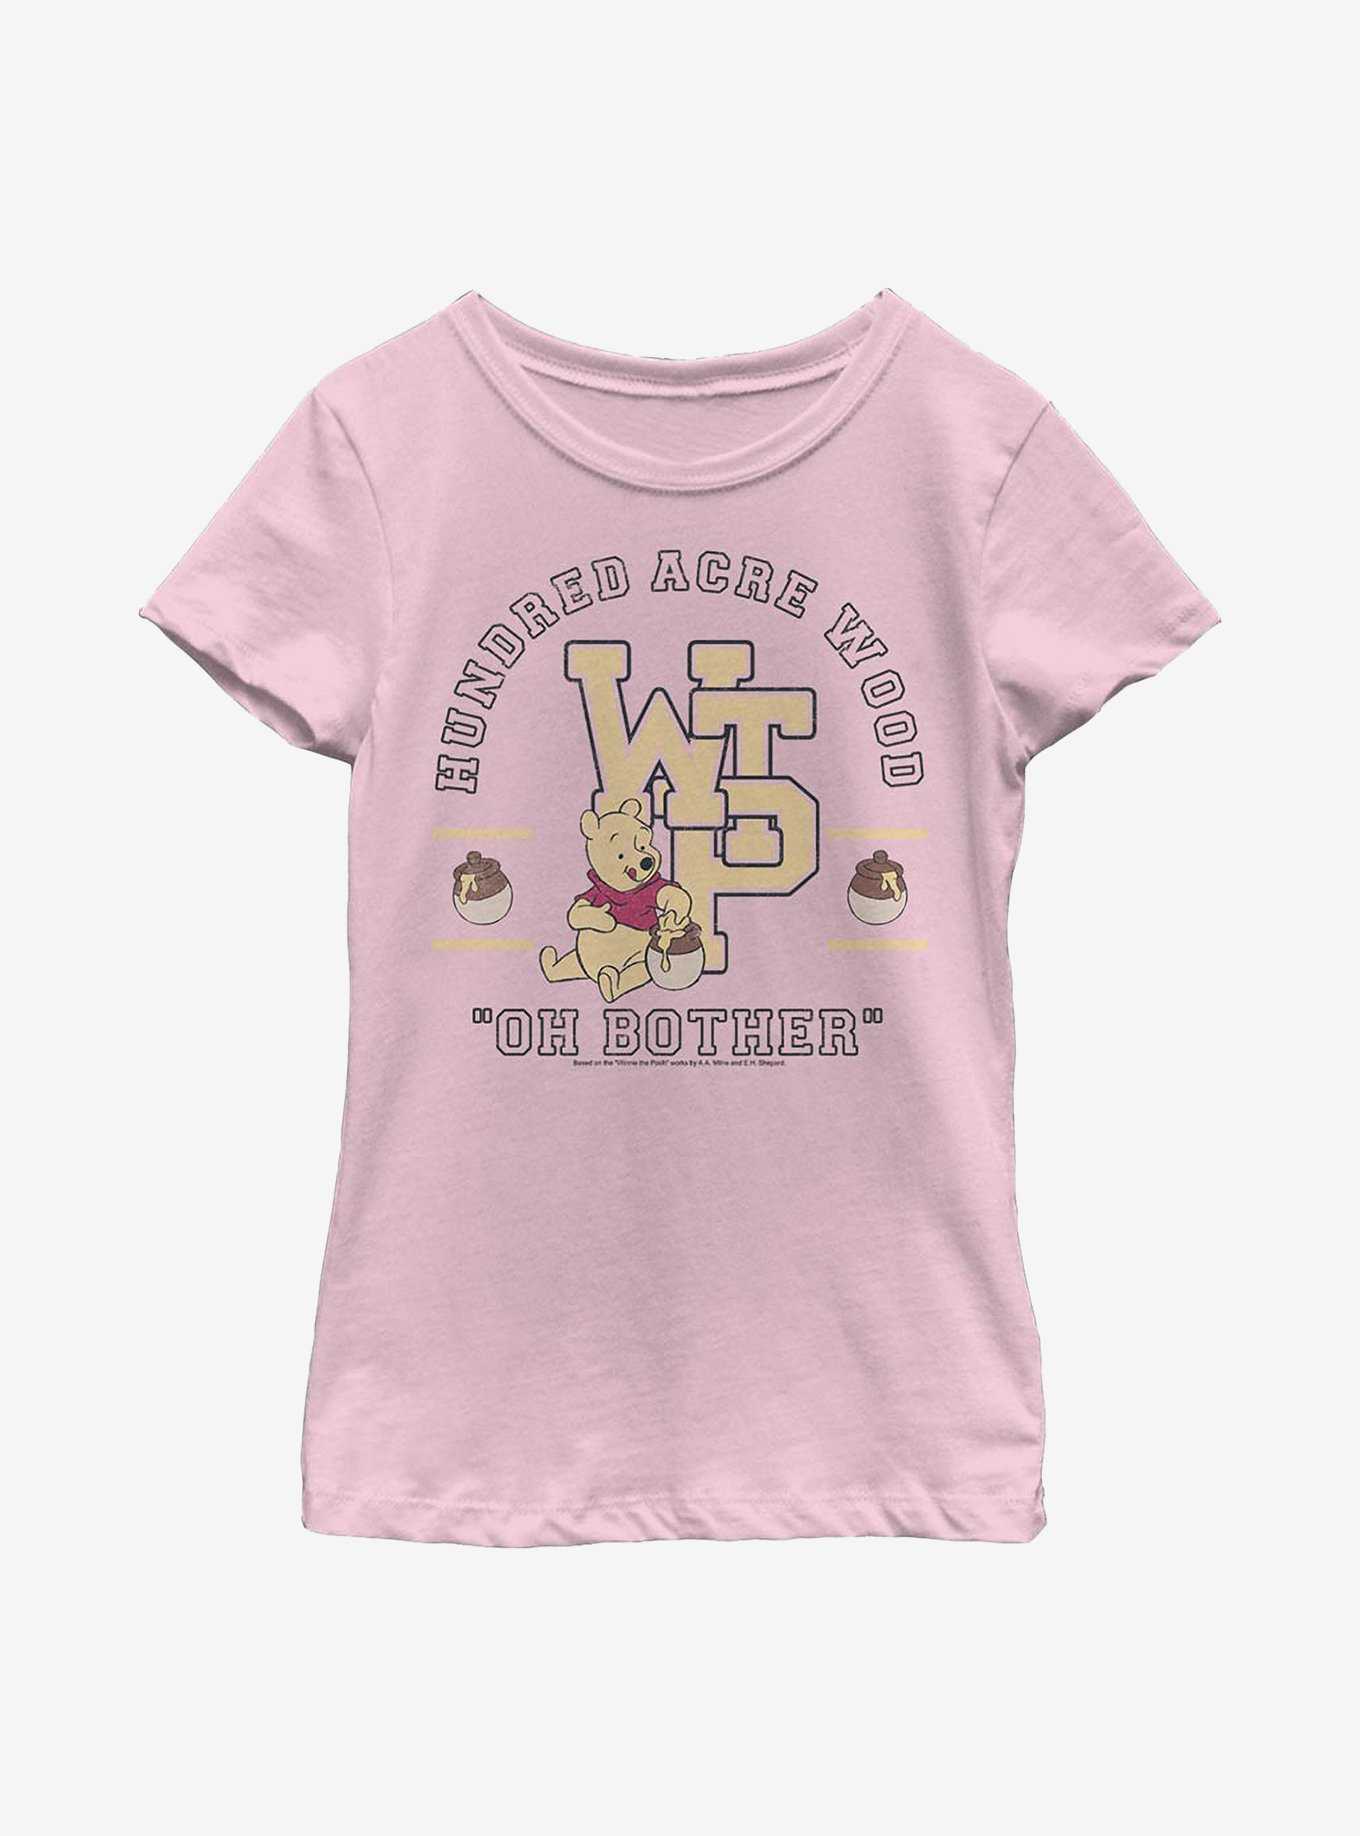 Disney Winnie The Pooh Collegiate Youth Girls T-Shirt, , hi-res